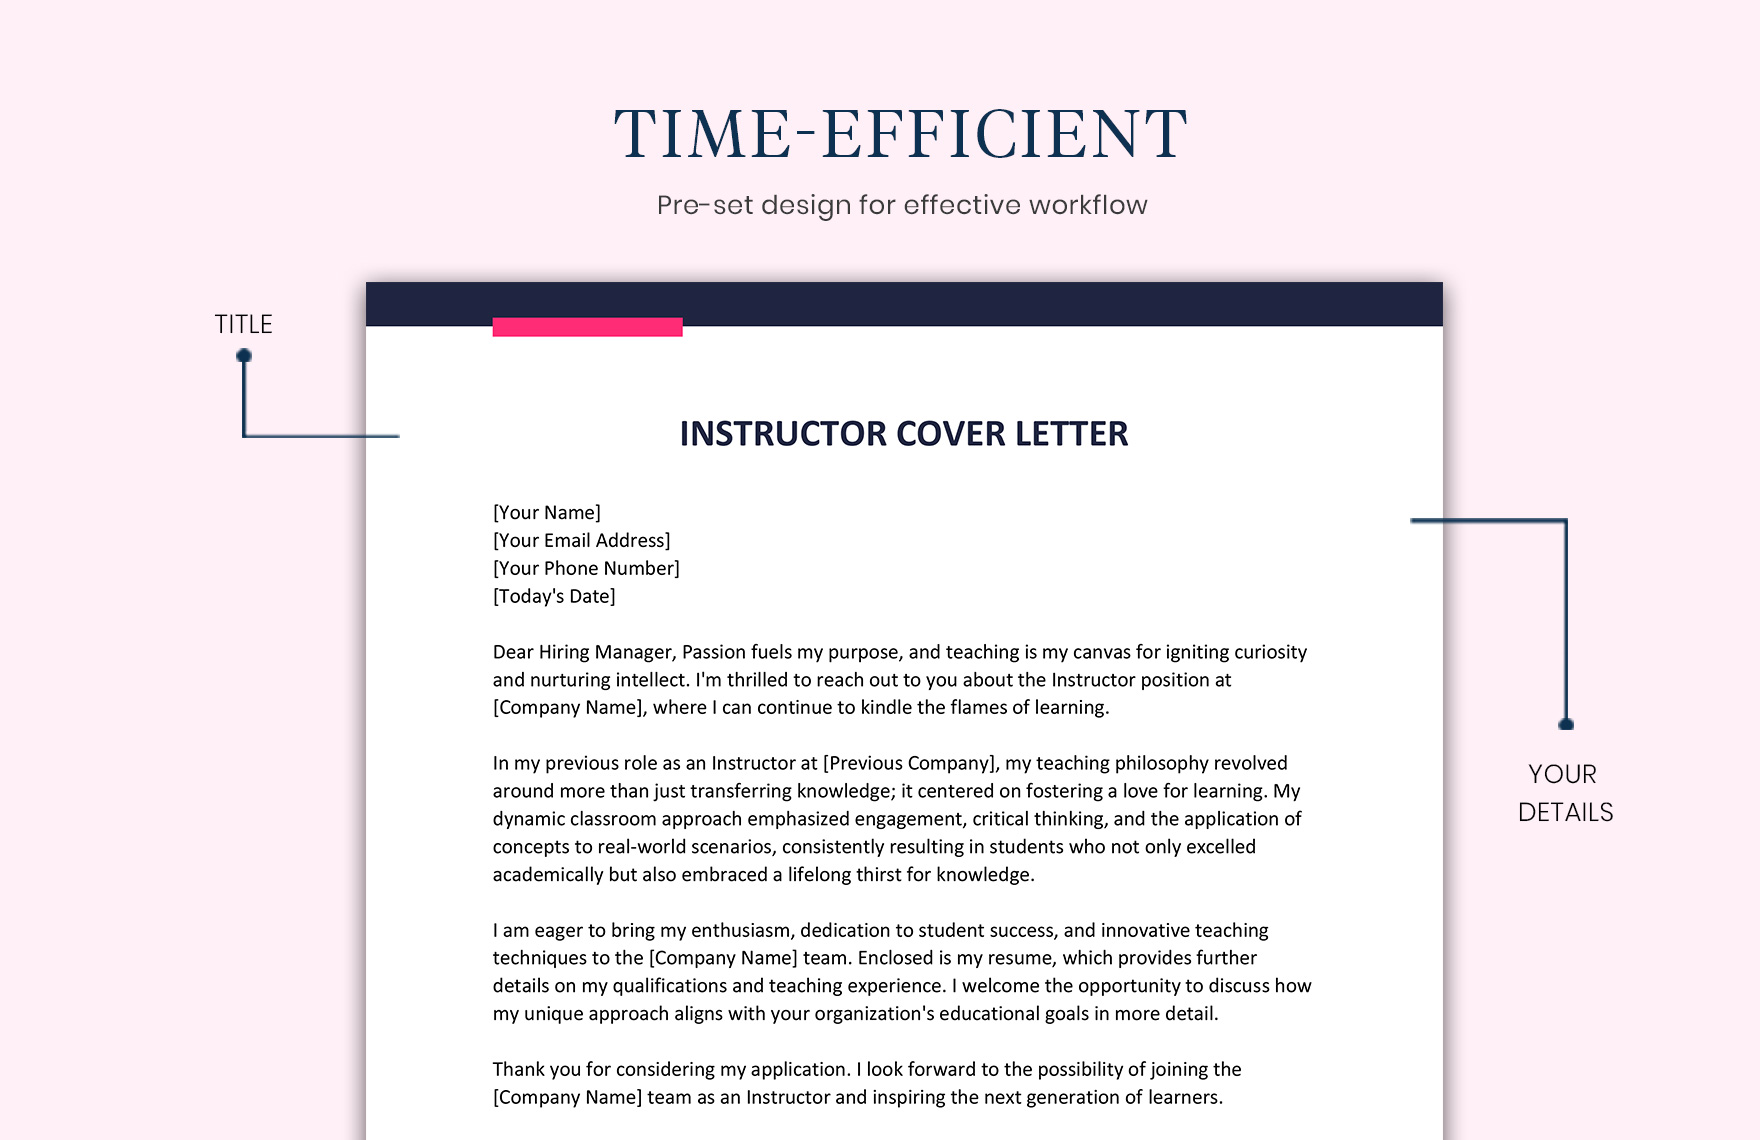 Instructor Cover Letter